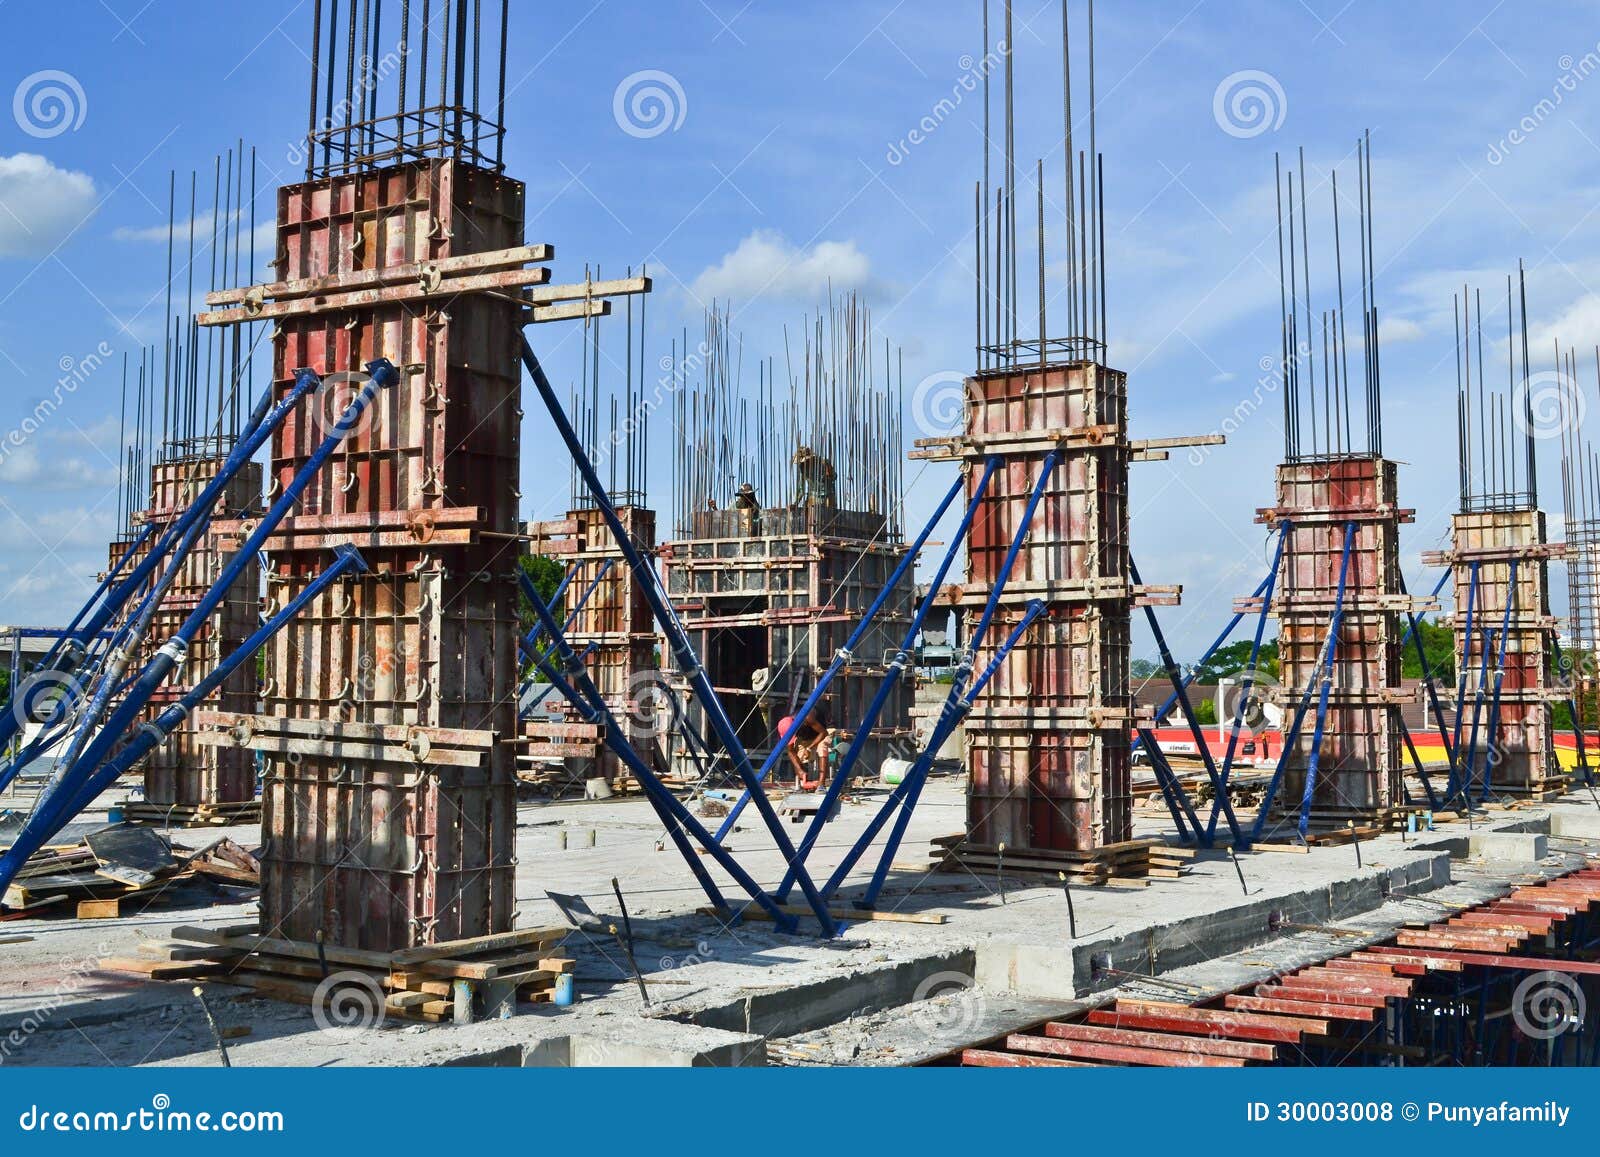 building cement pillar in construct site